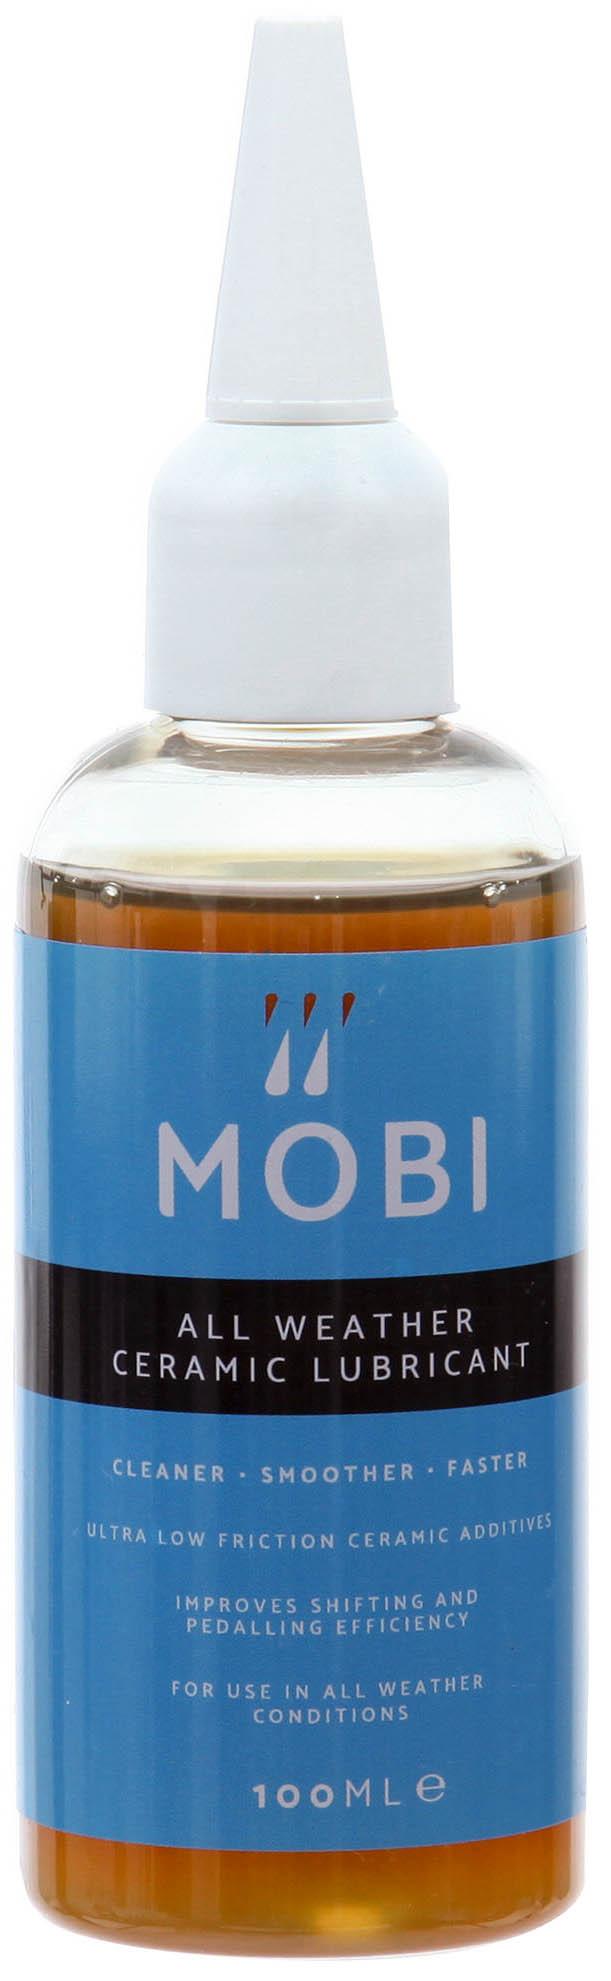 Mobi All Weather Ceramic Lubricant 100ml - Neutral